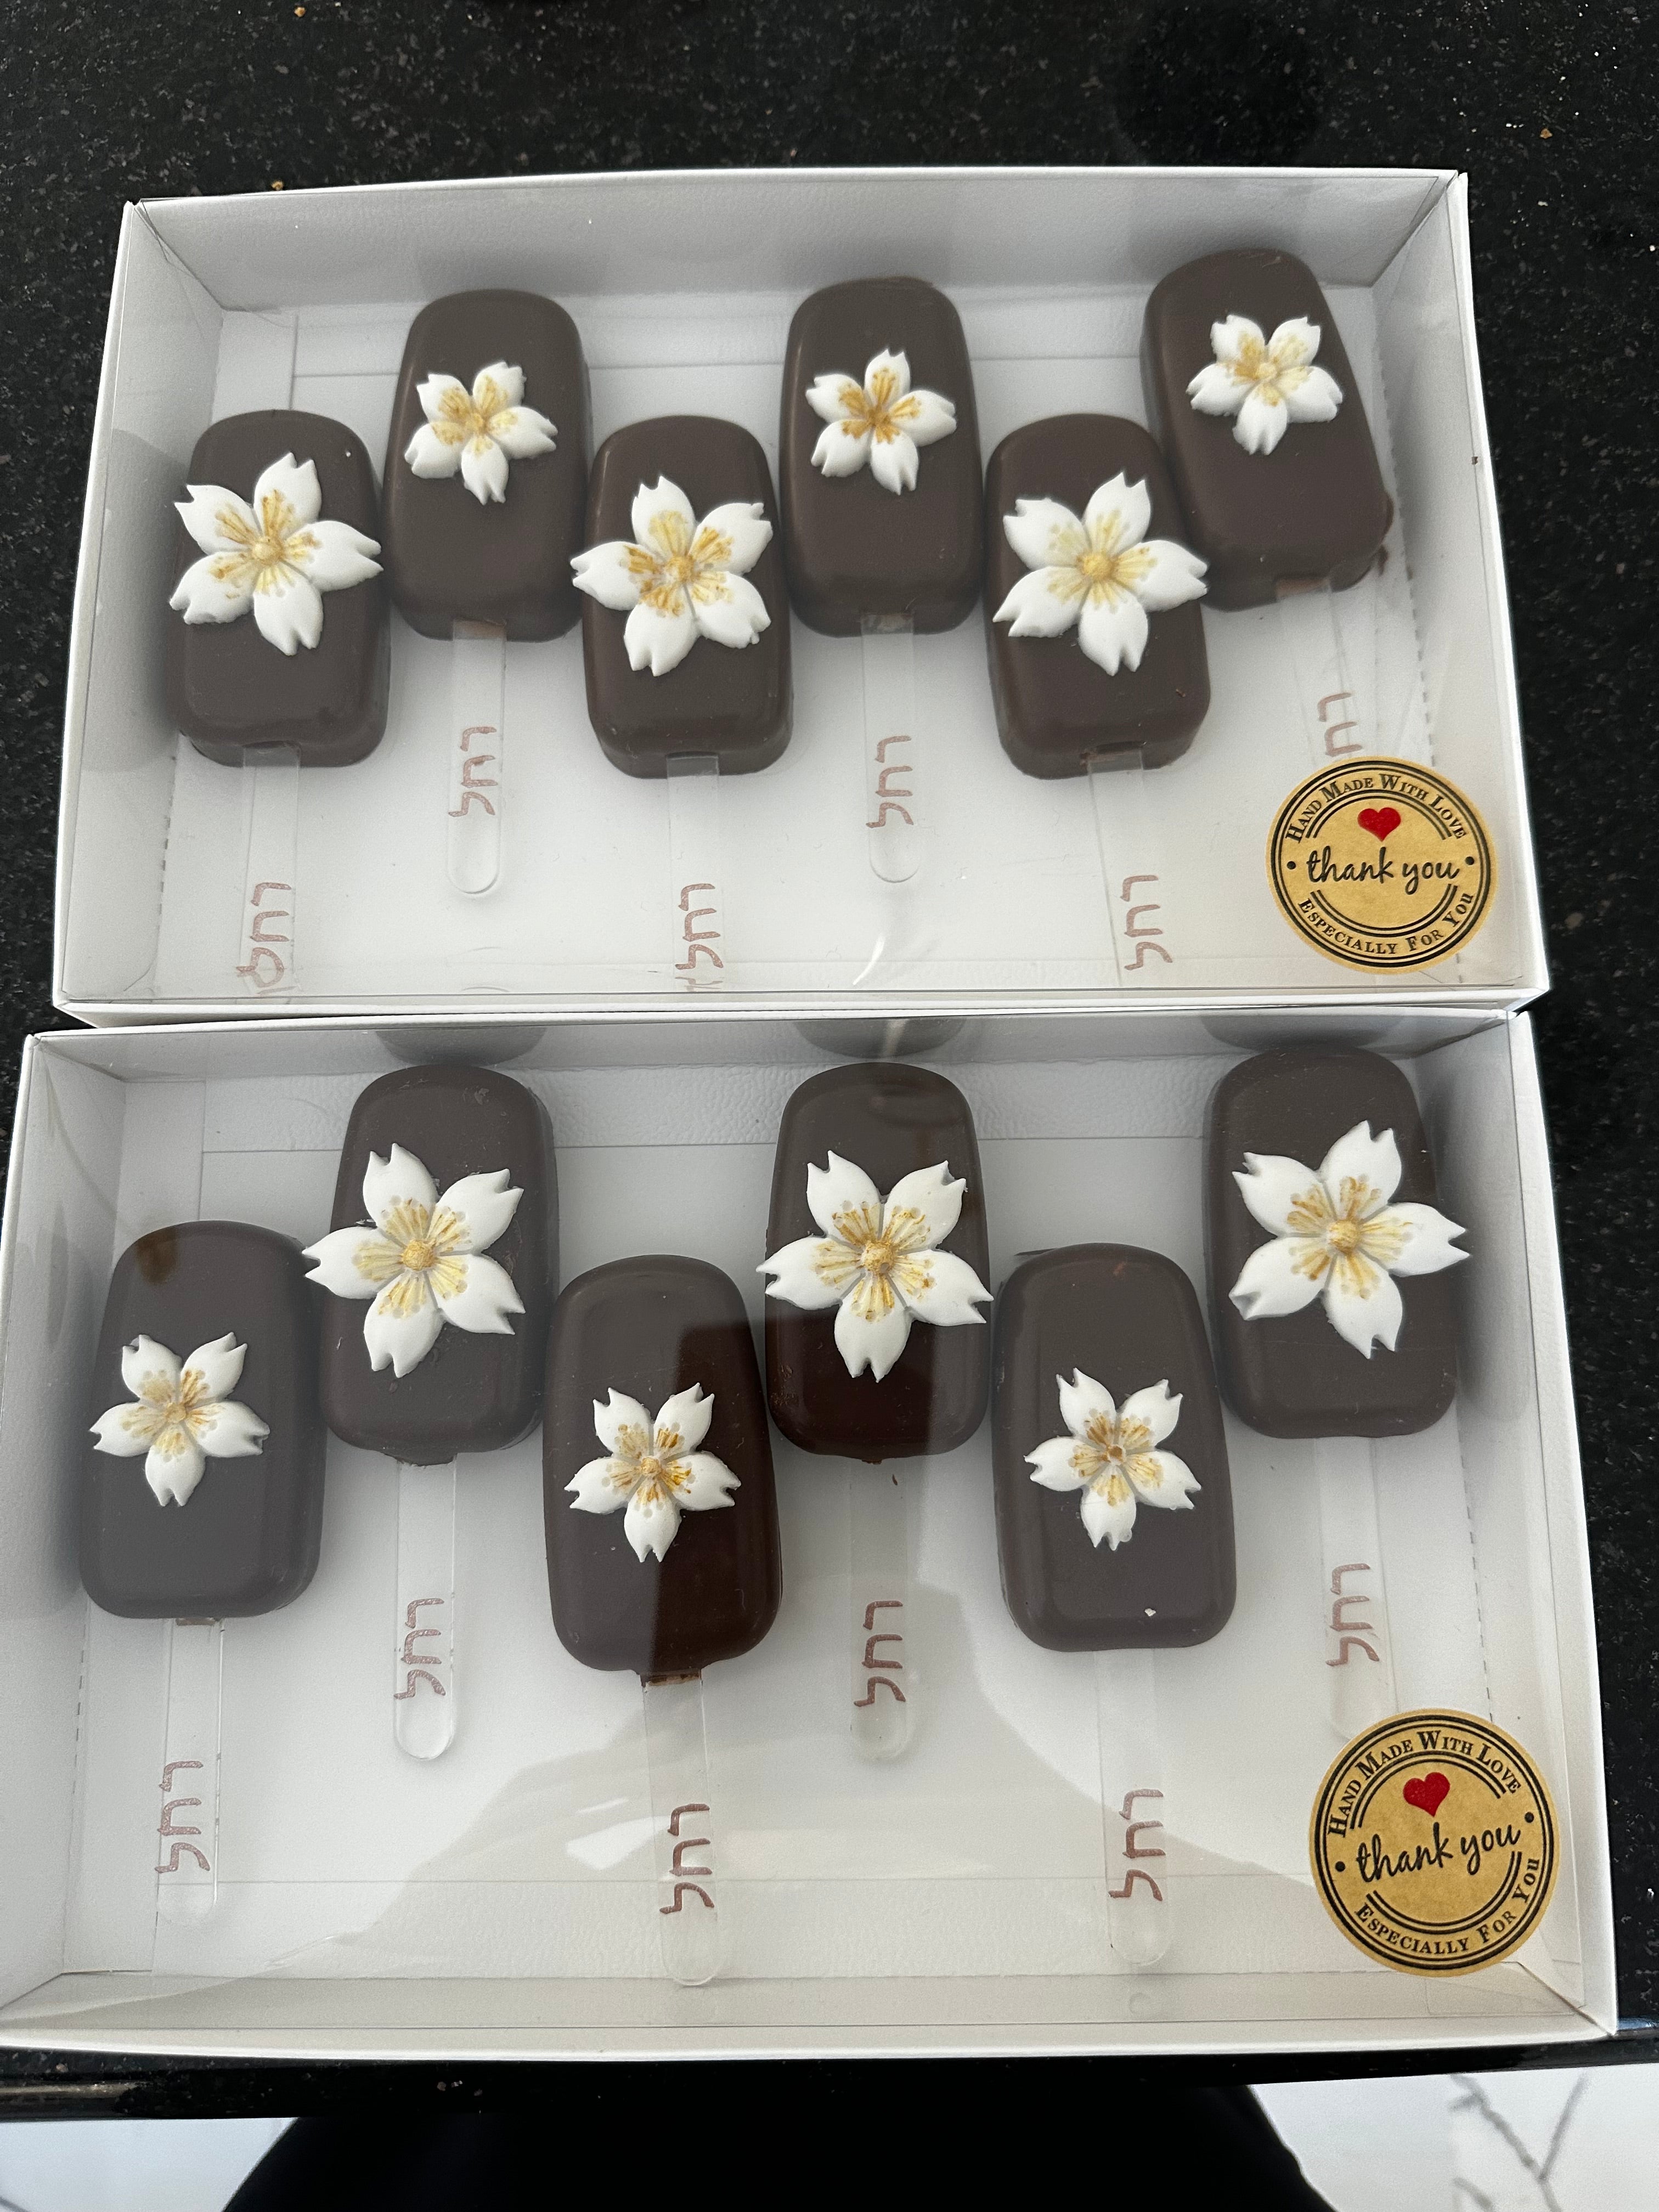 Classy Pops Chocolate - Bat mitzvah / Birthday / Flowers